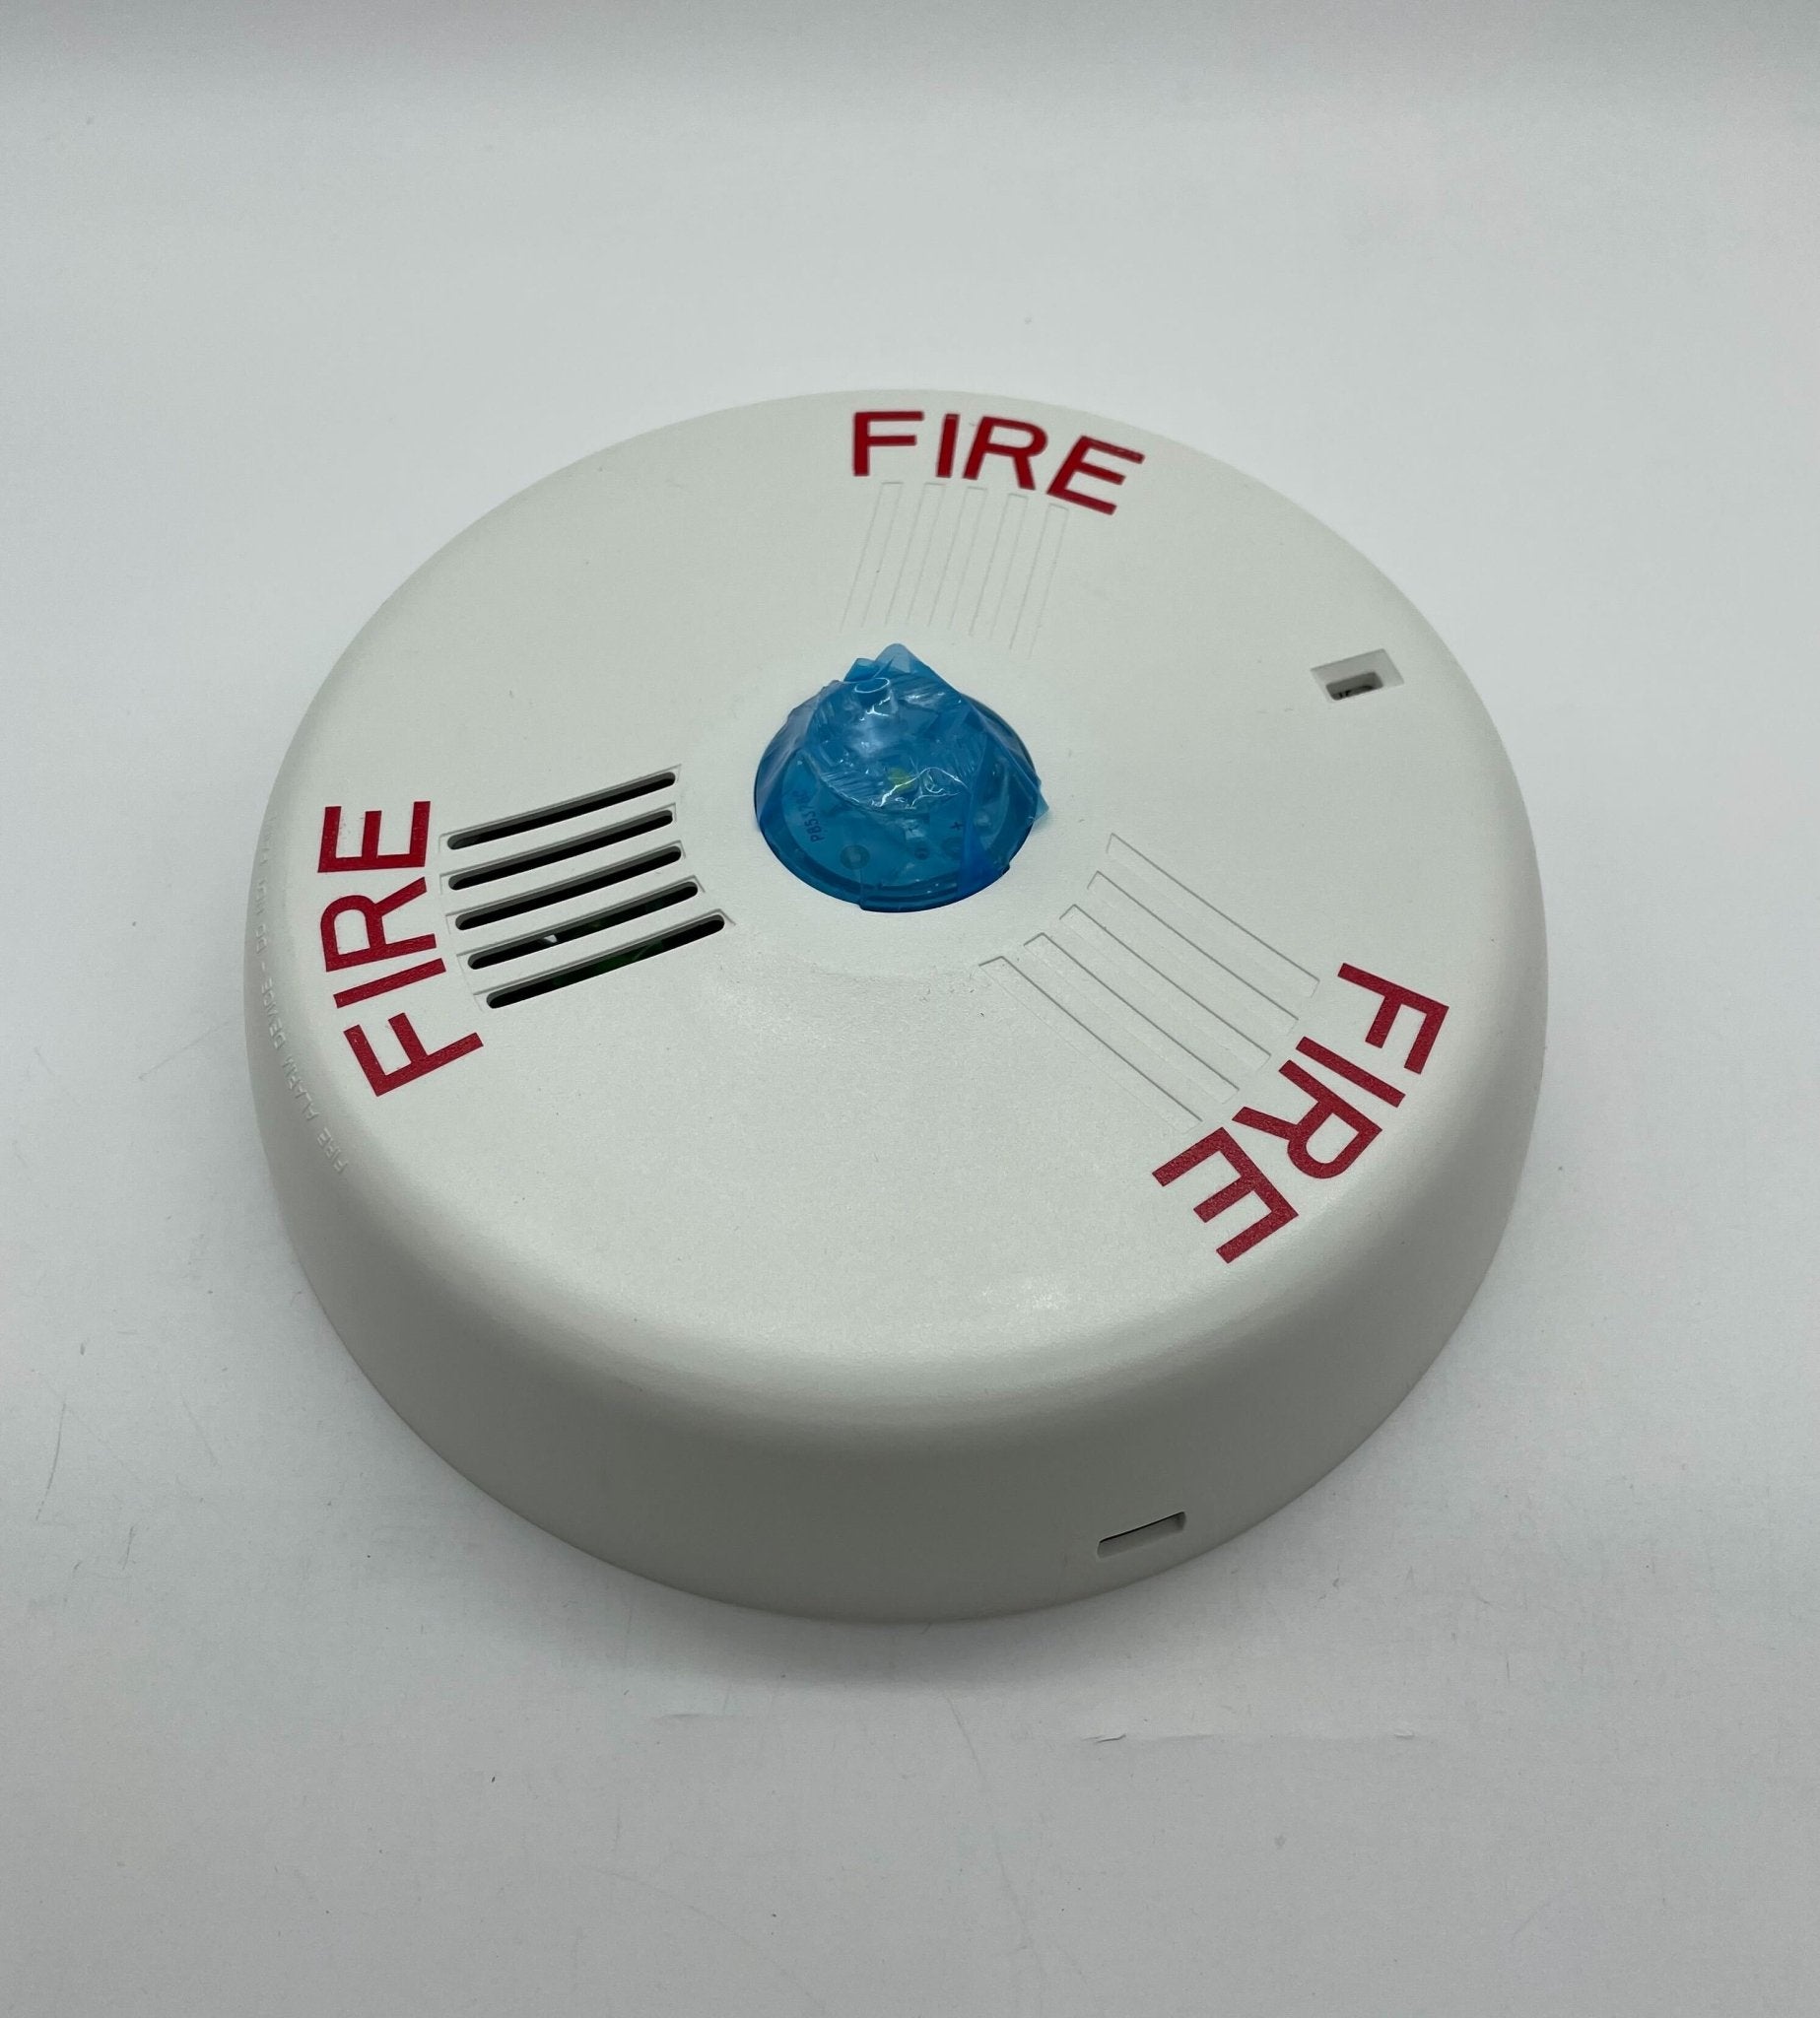 Wheelock LHSWC - The Fire Alarm Supplier